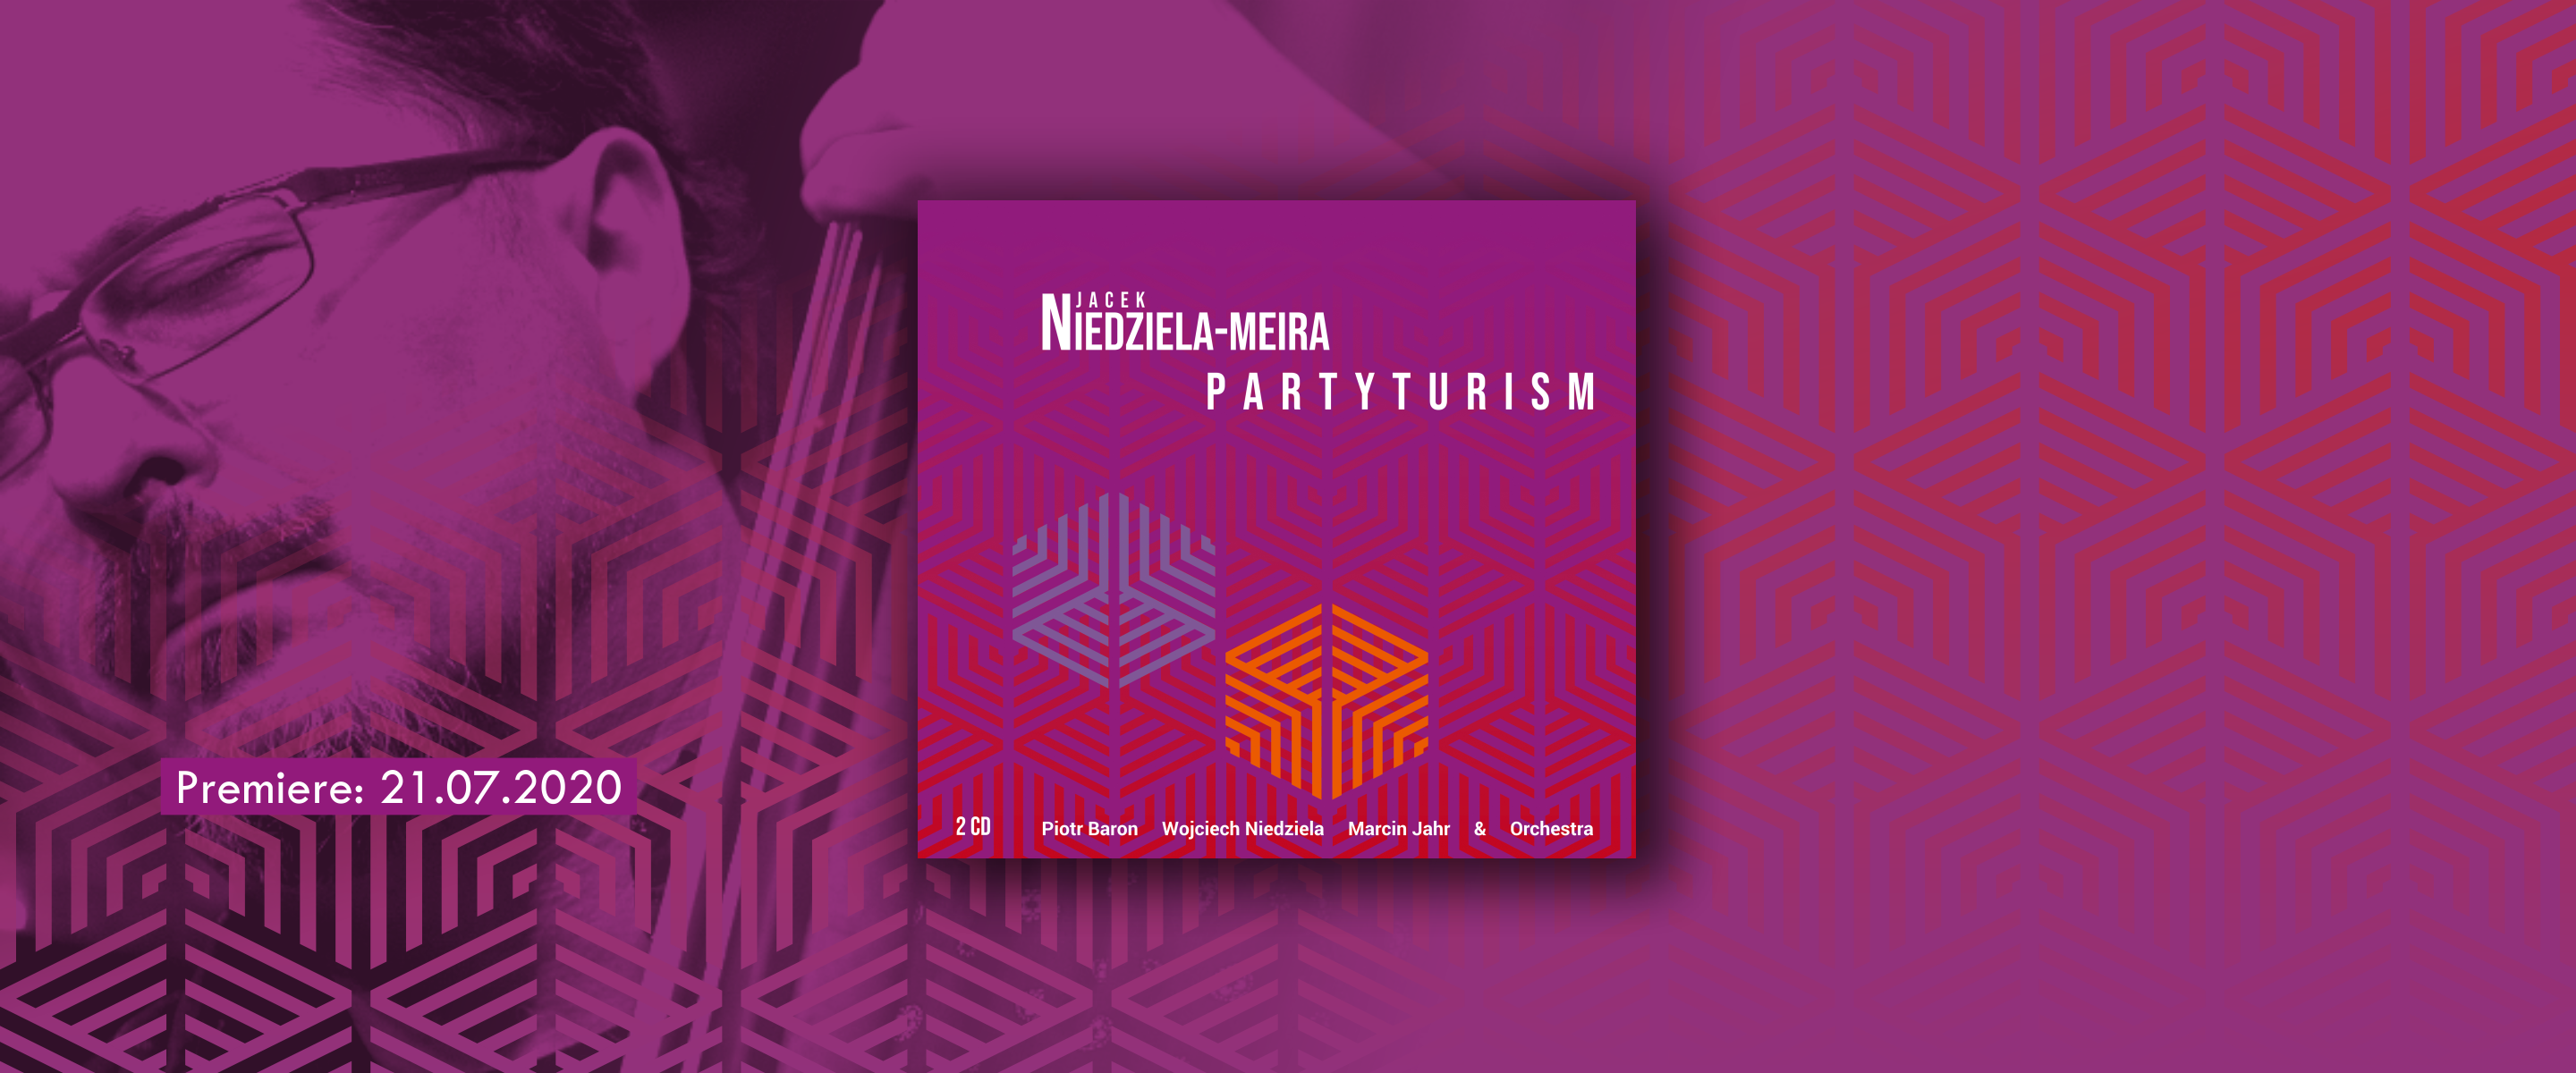 Jacek Niedziela - Meira - Partyturism